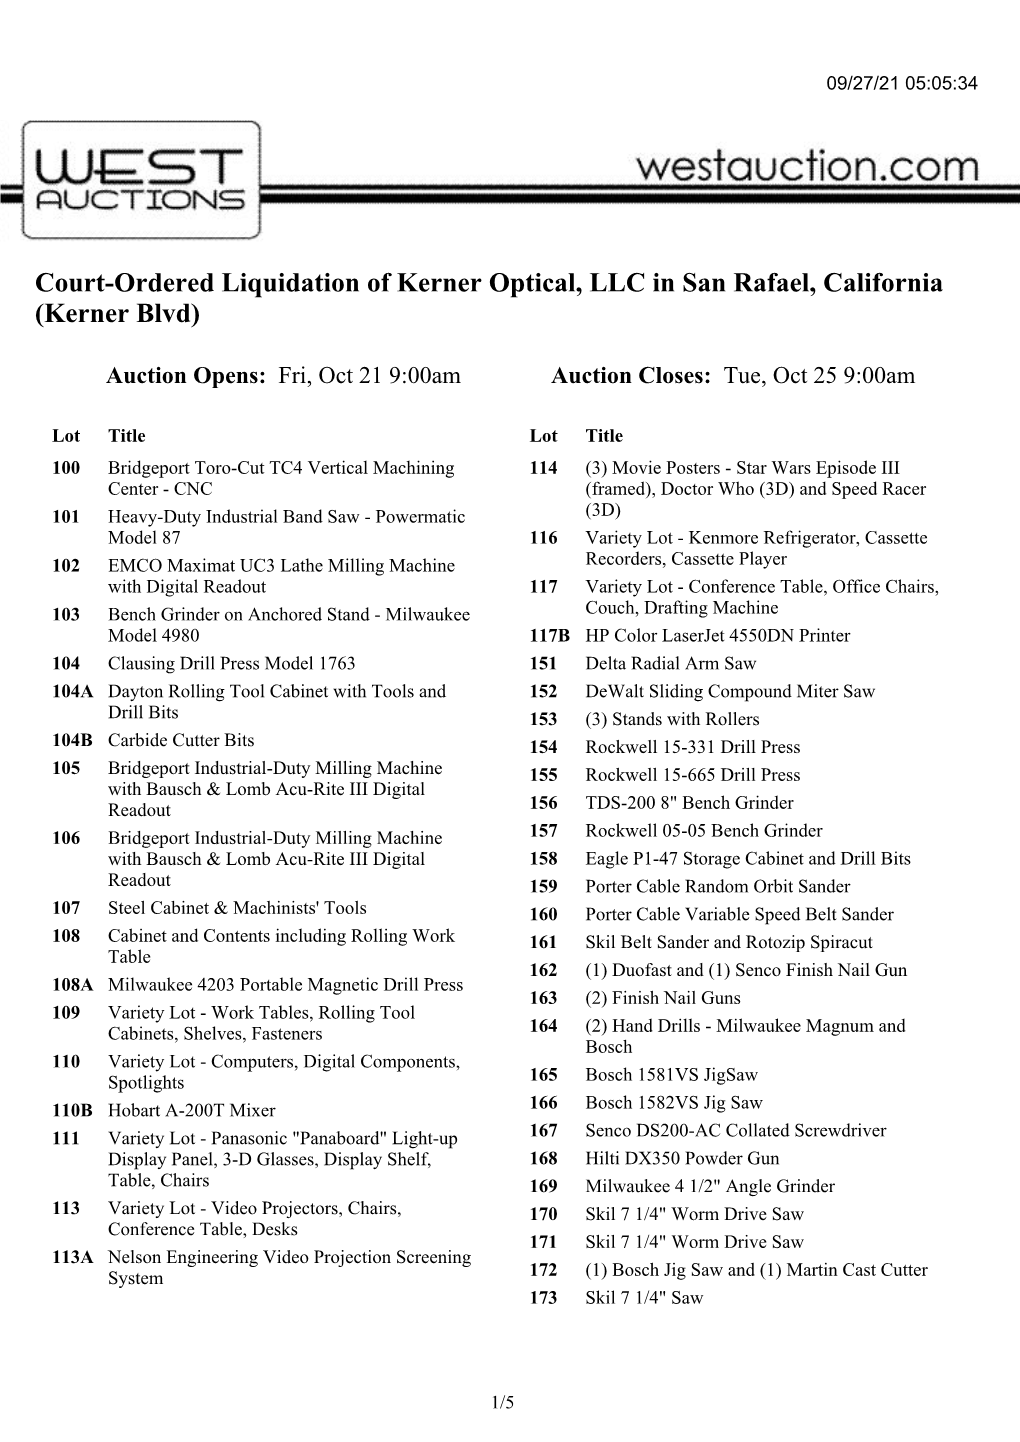 Court-Ordered Liquidation of Kerner Optical, LLC in San Rafael, California (Kerner Blvd)